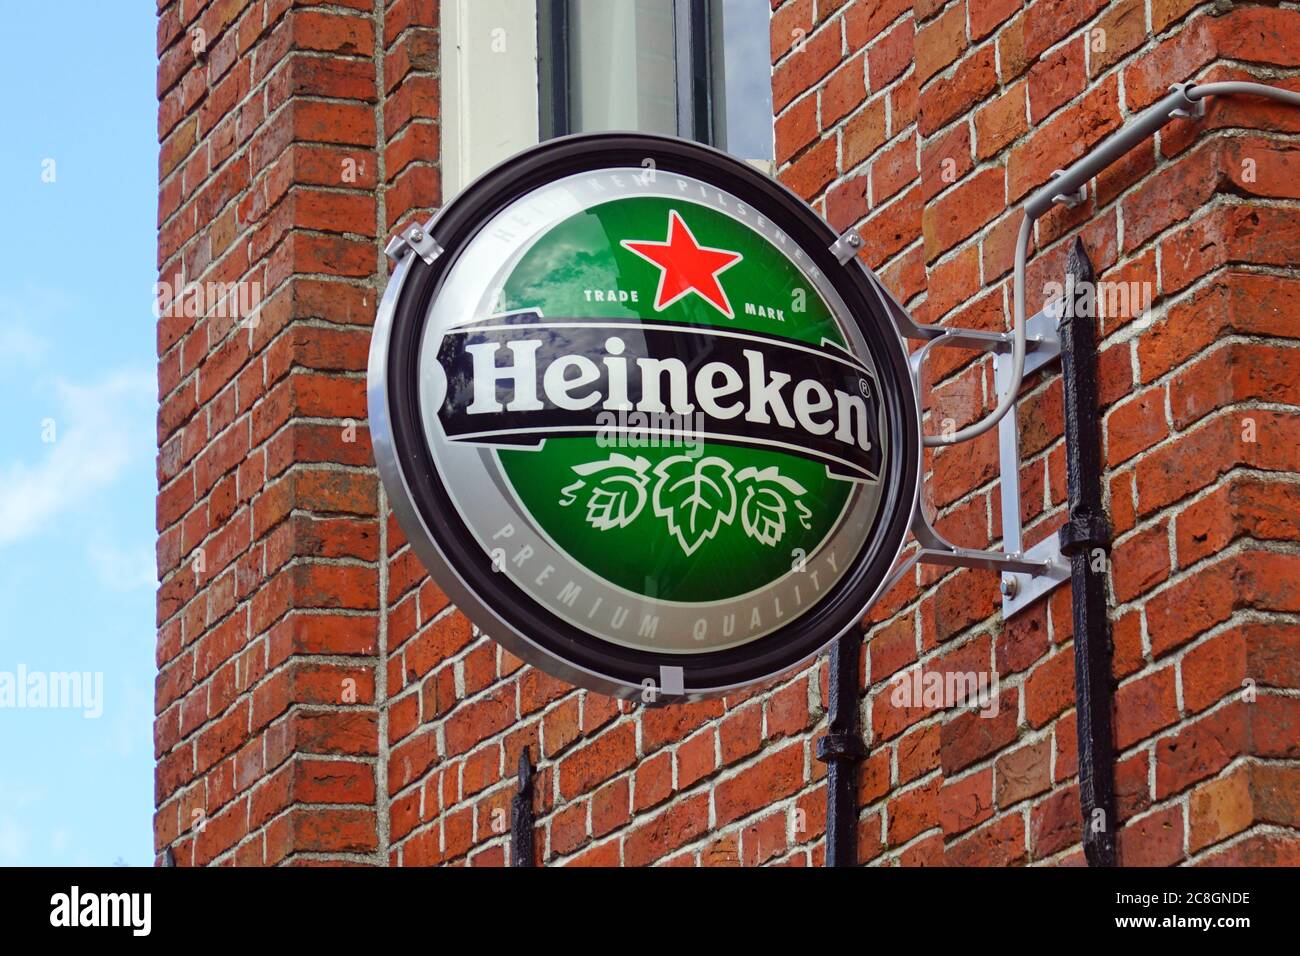 Eenrum, the Netherland - July 15, 2020:  Dutch Heineken beer wall advertisement sign. Stock Photo